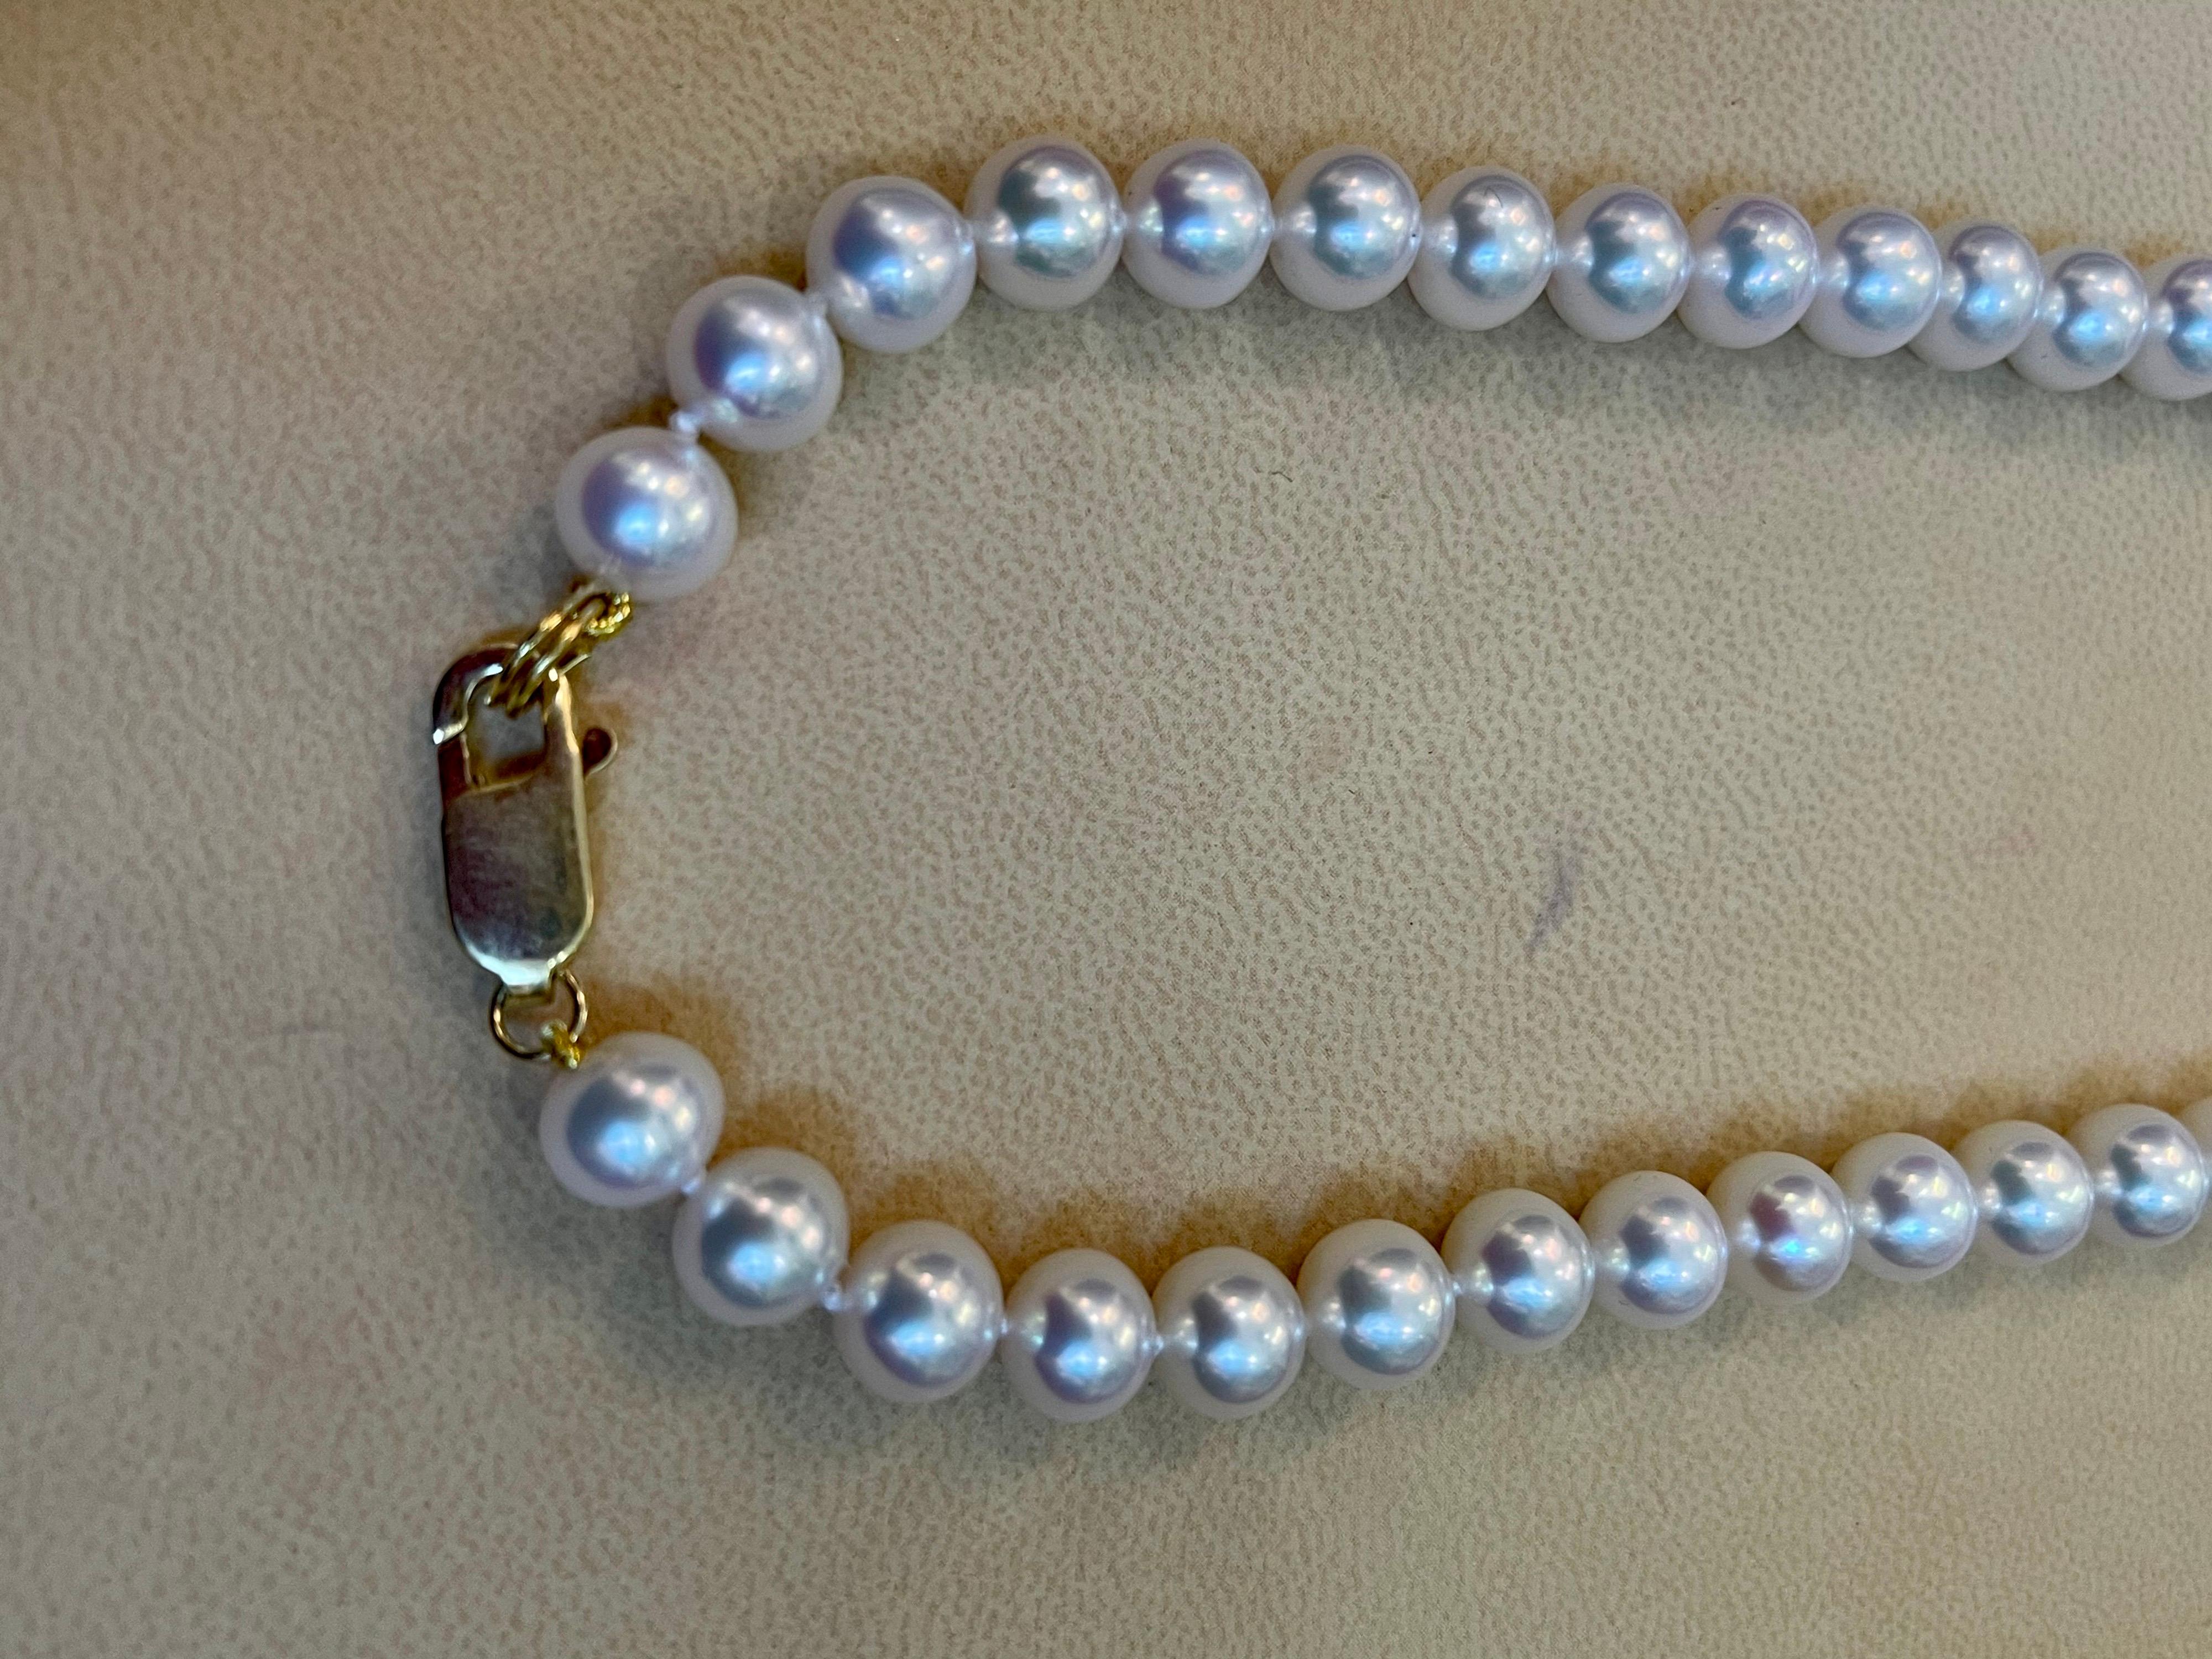 50 Round Akoya Pearls Strand Necklace Set in 14 Karat Gold Clasp 4